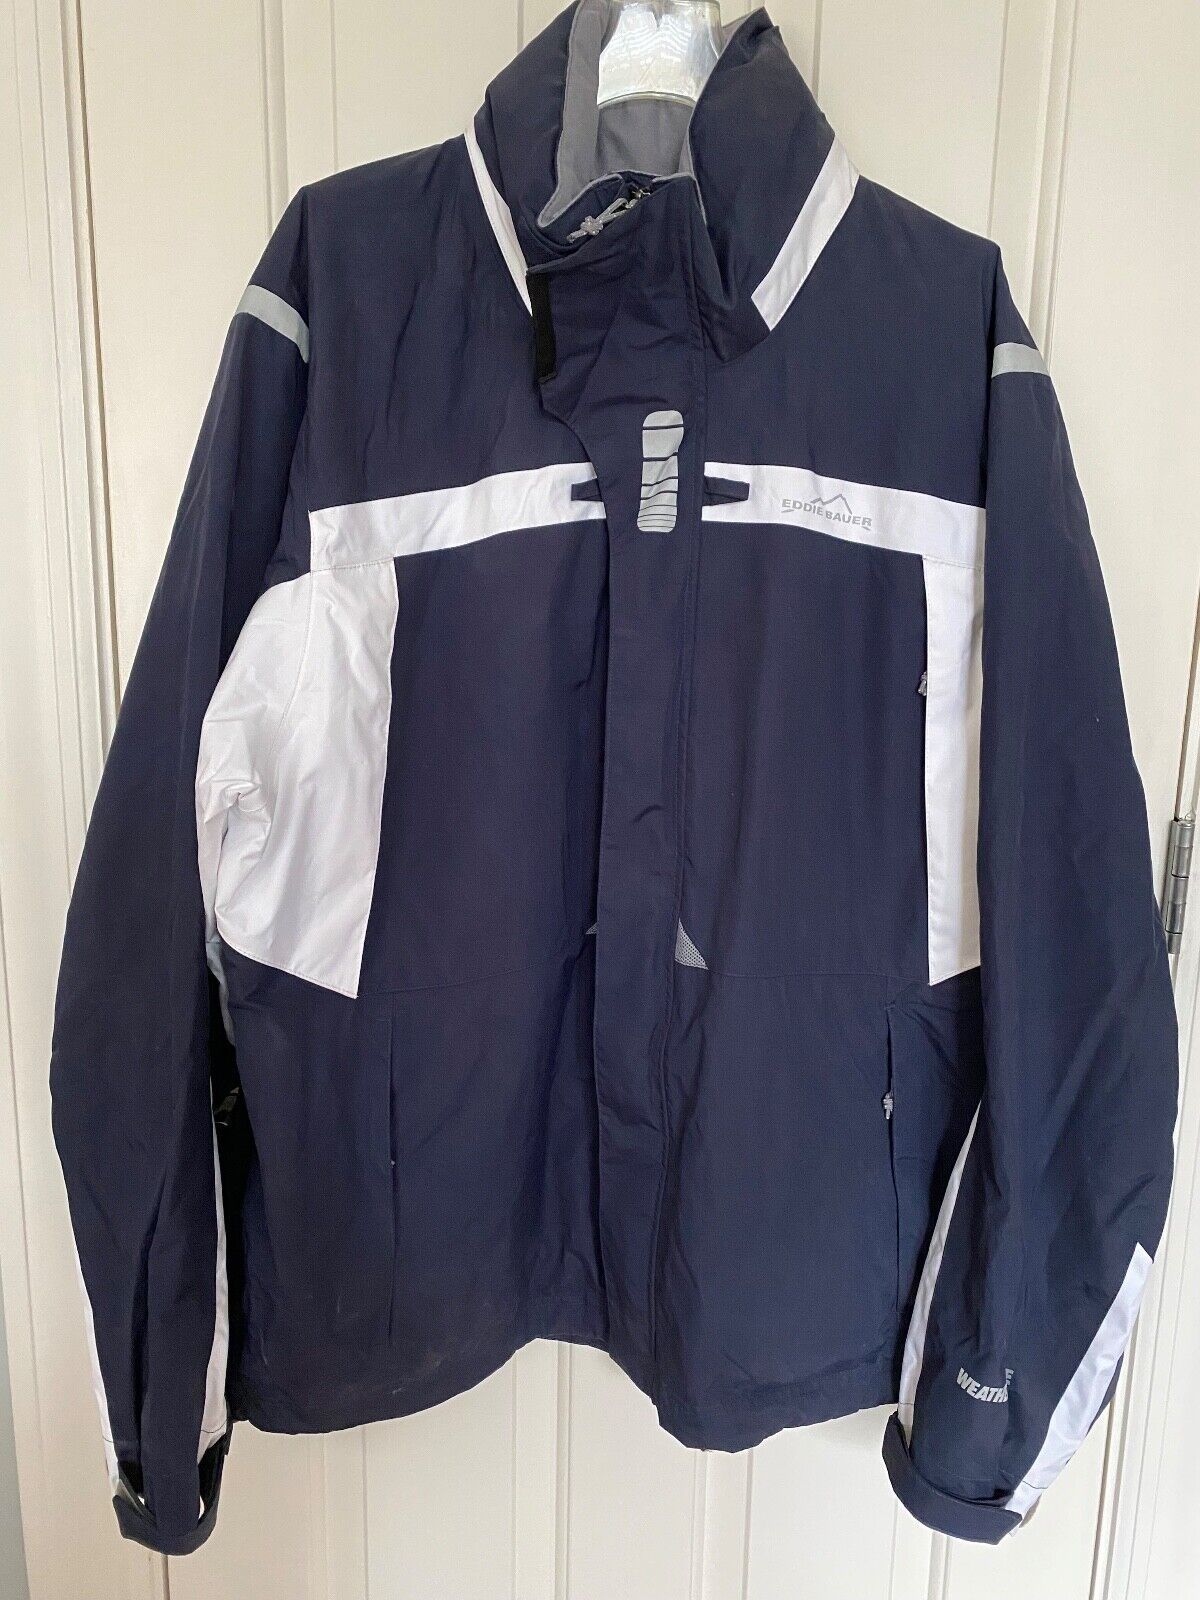 Primary image for Eddie Bauer Weatheredge Nautical Jacket Men’s Size XL Navy NOS